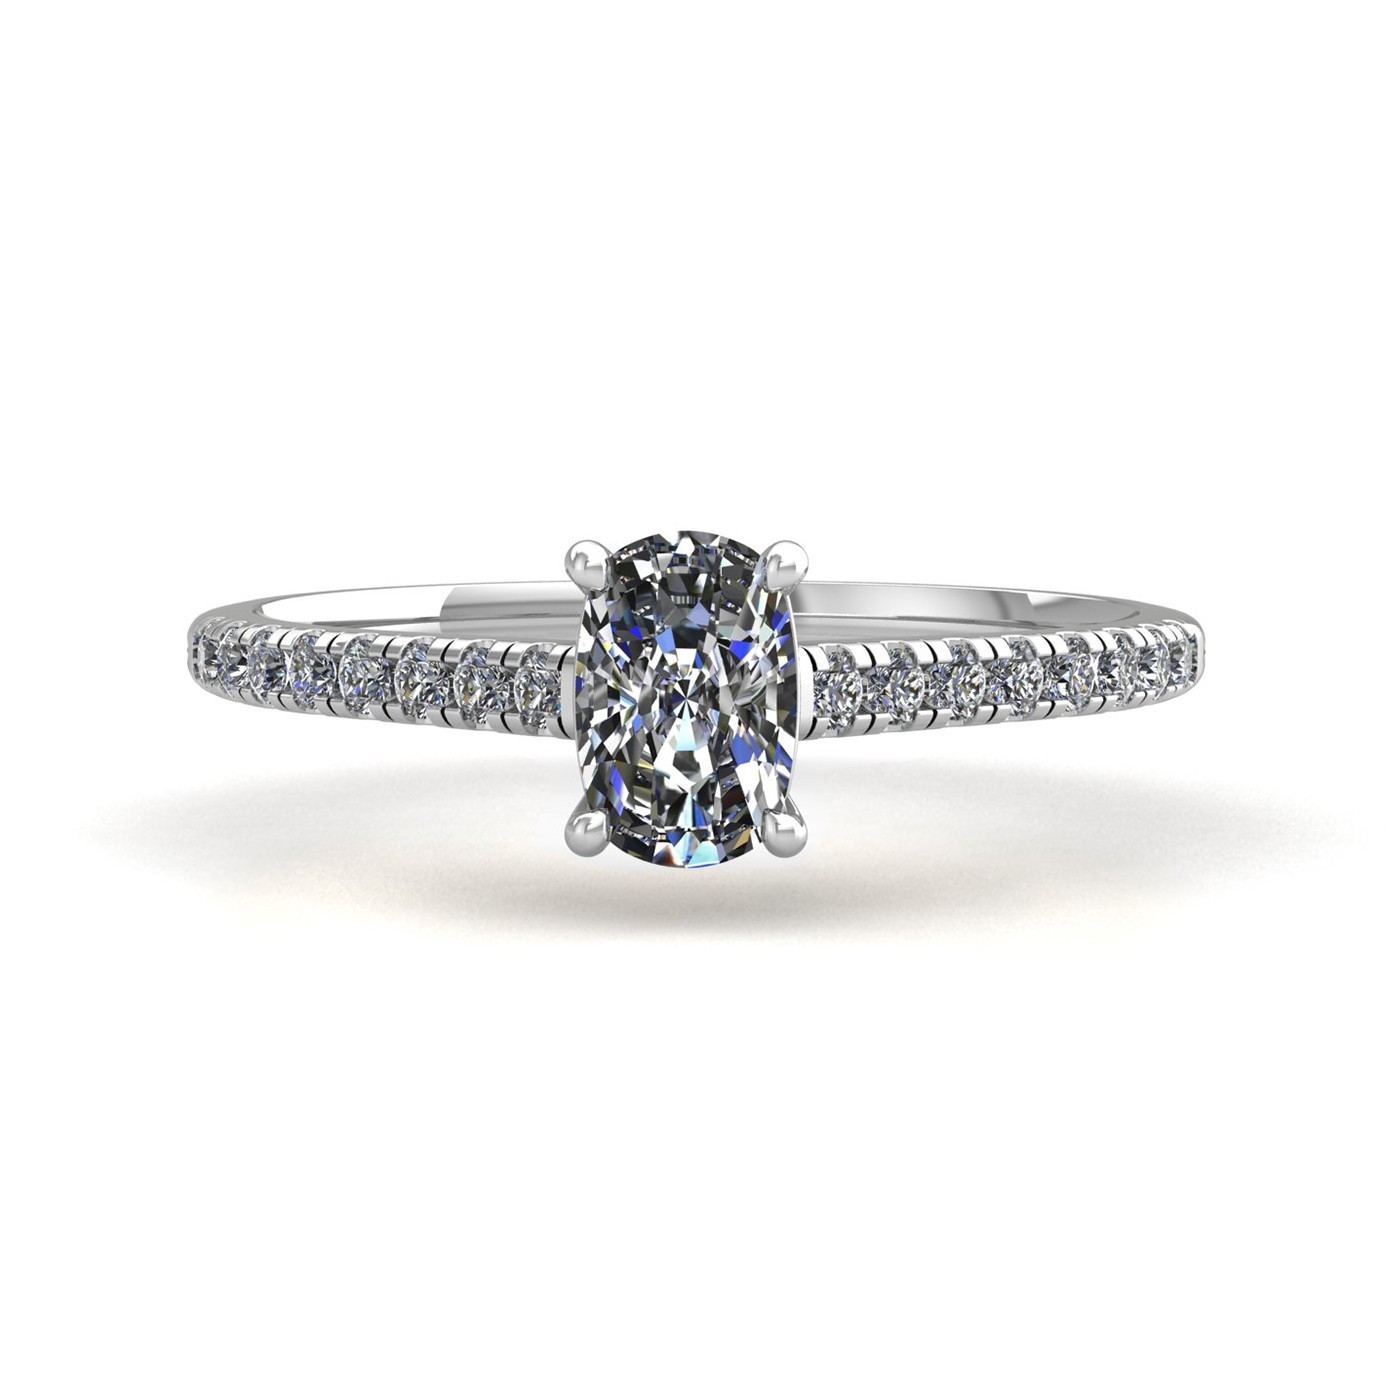 18k white gold  4 prongs cushion cut diamond engagement ring with whisper thin pavÉ set band